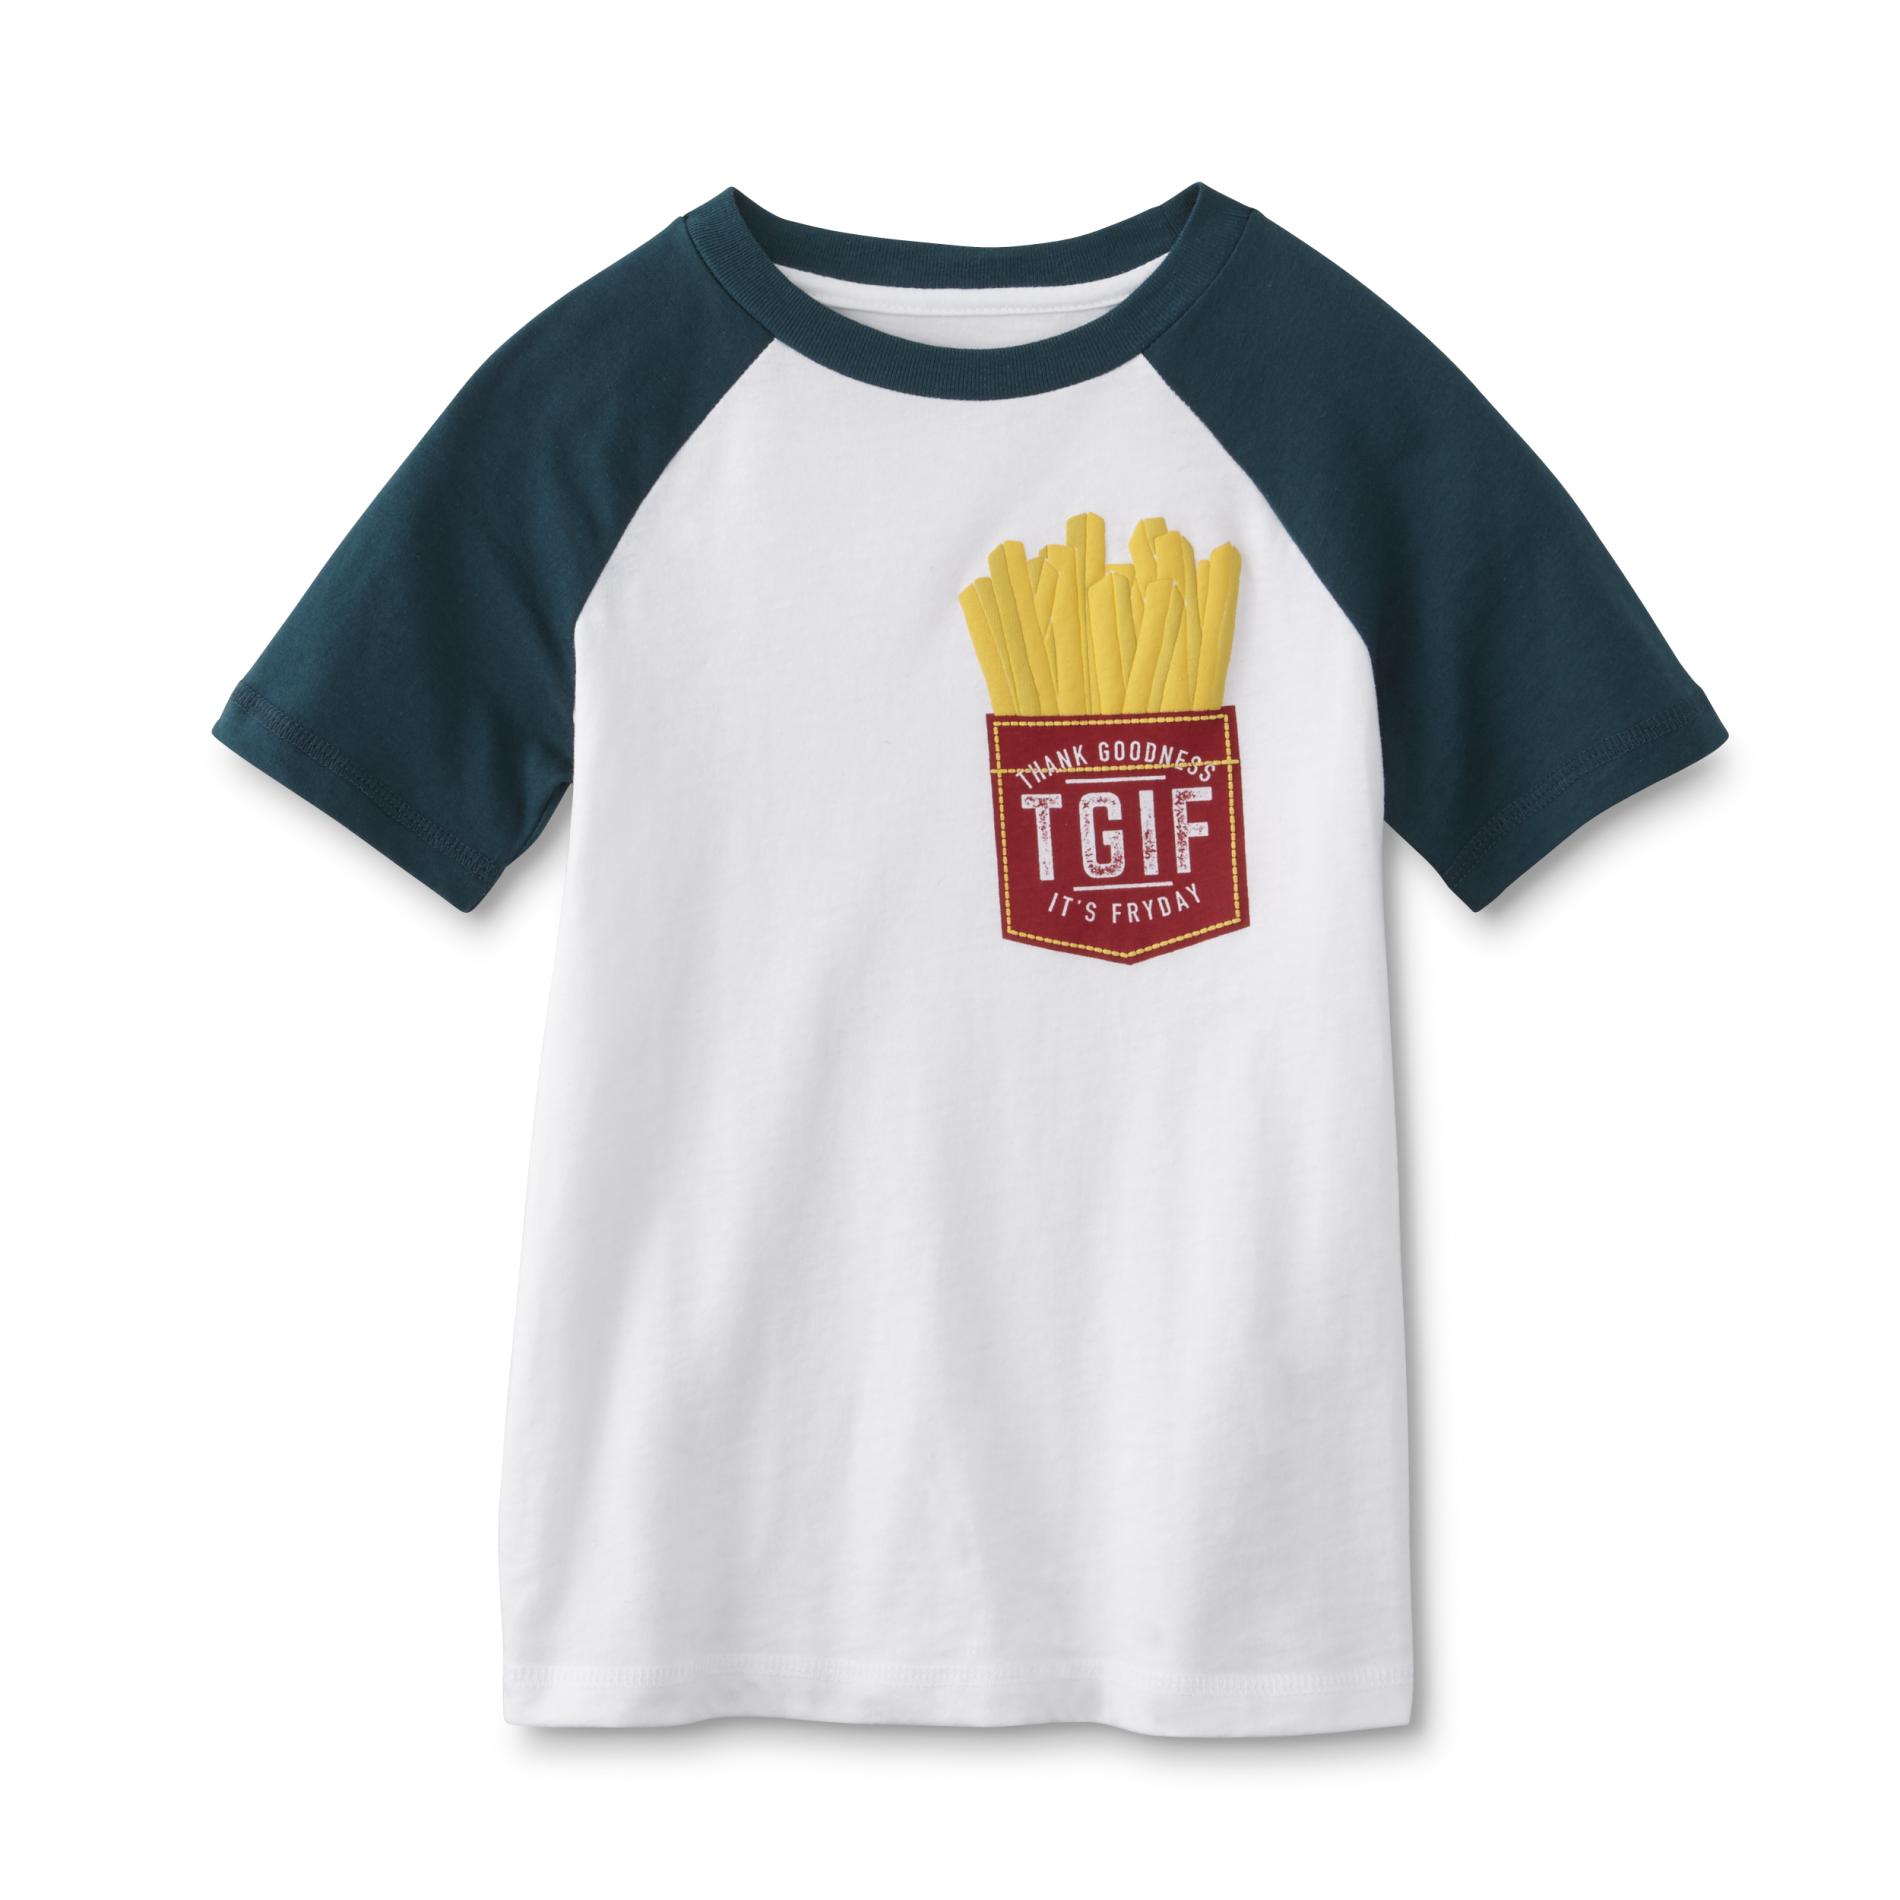 Toughskins Infant & Toddler Boys' Raglan Sleeve T-Shirt - TGIF